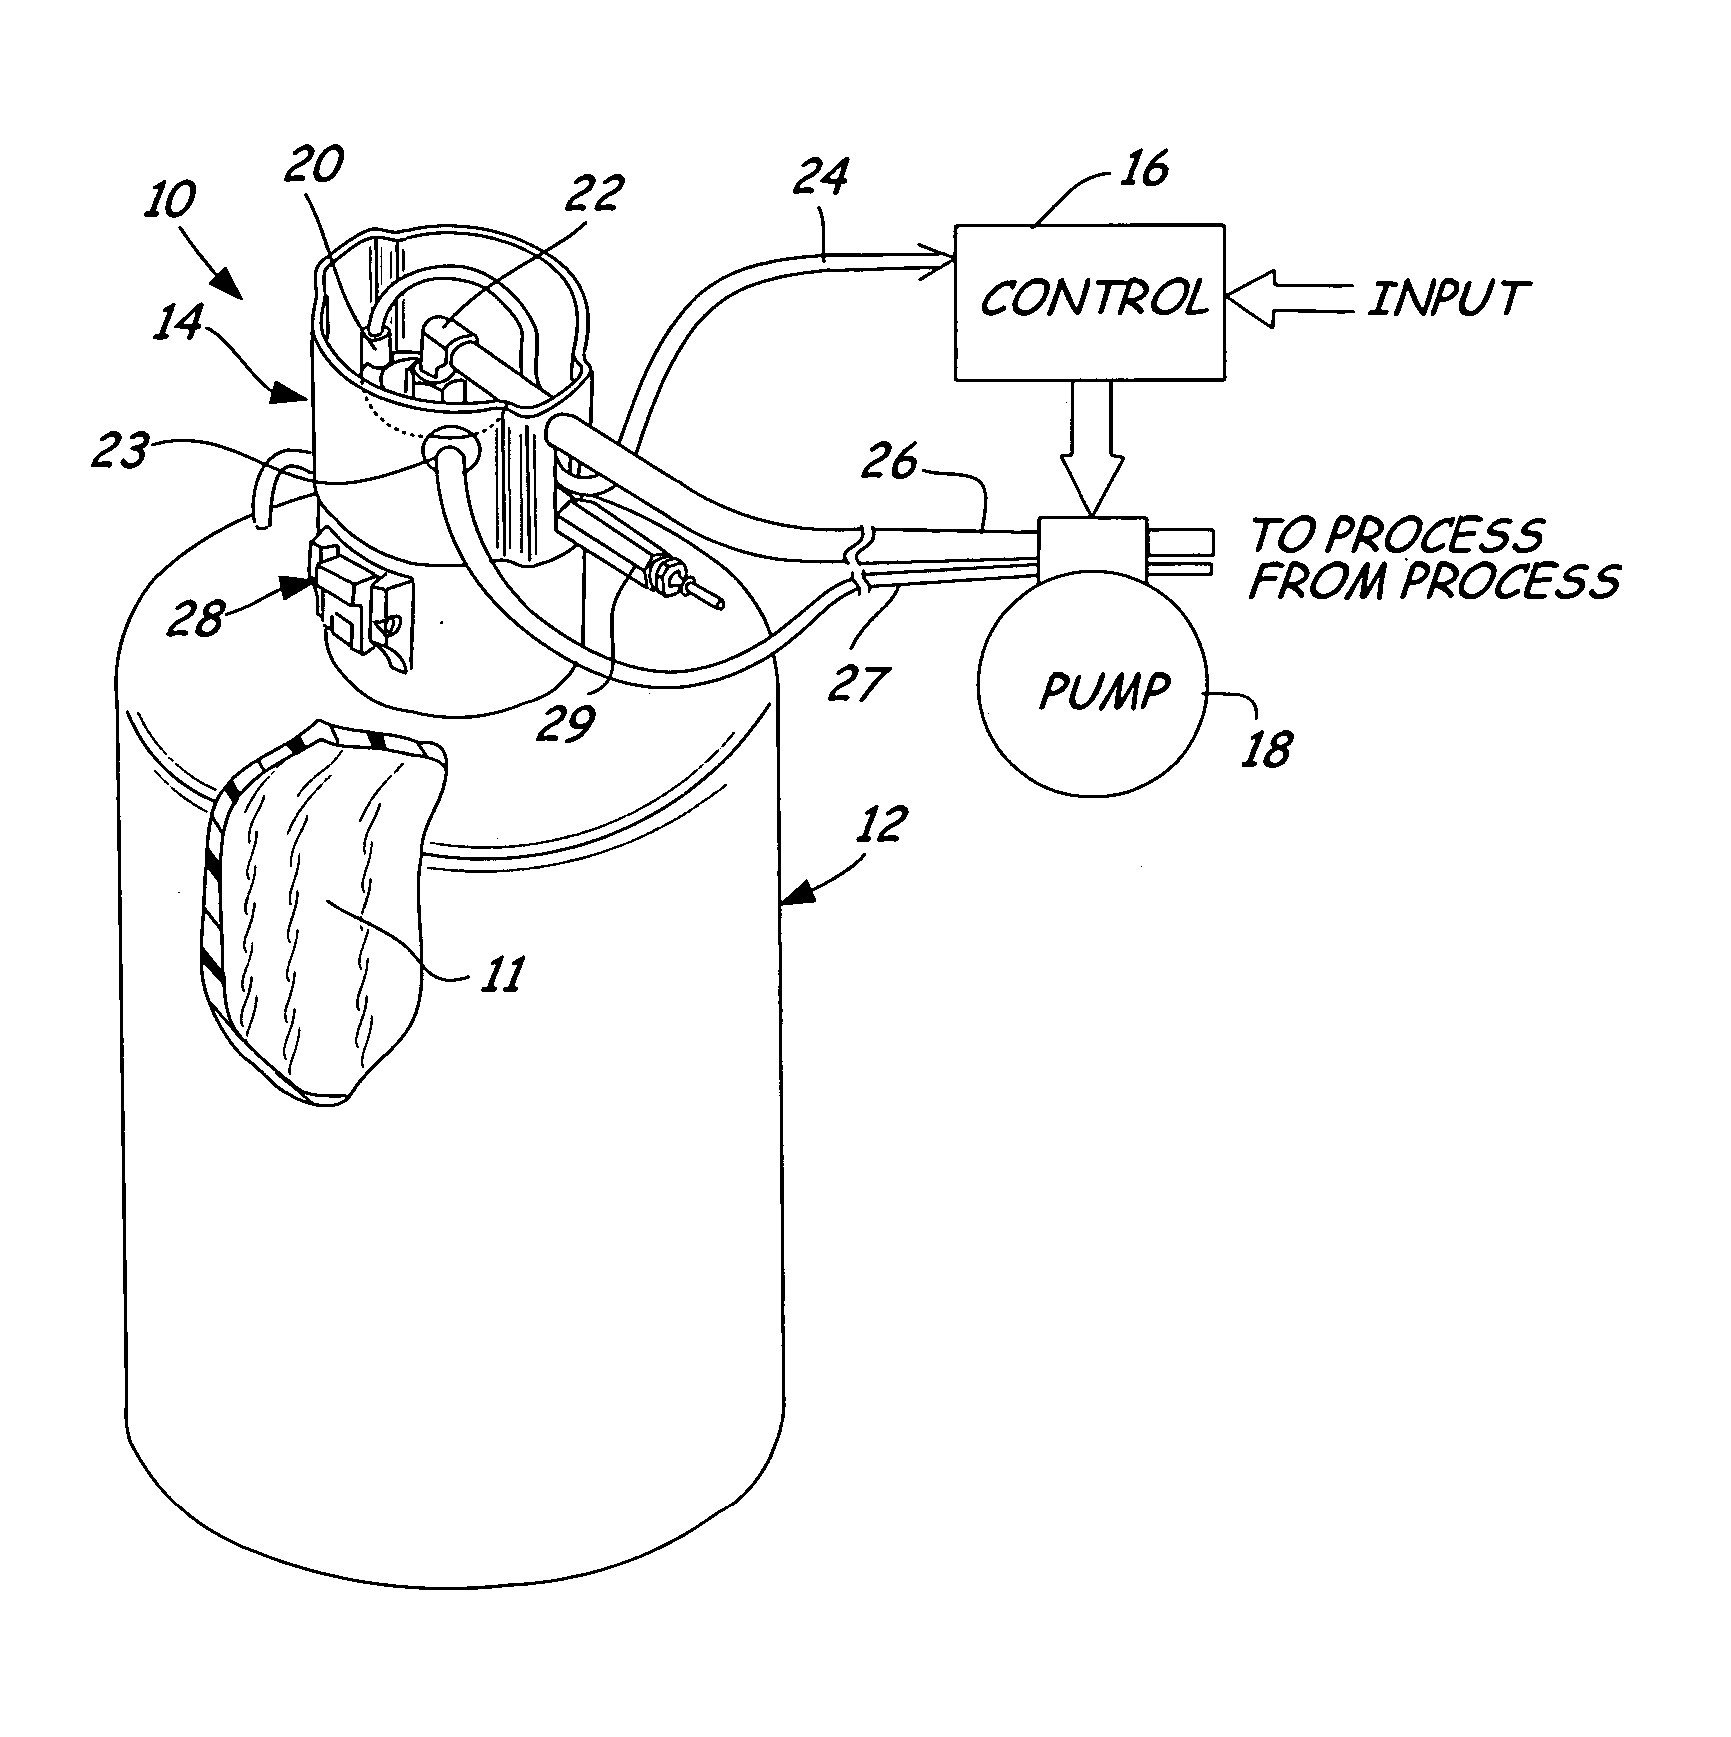 Liquid dispensing and recirculating system with sensor